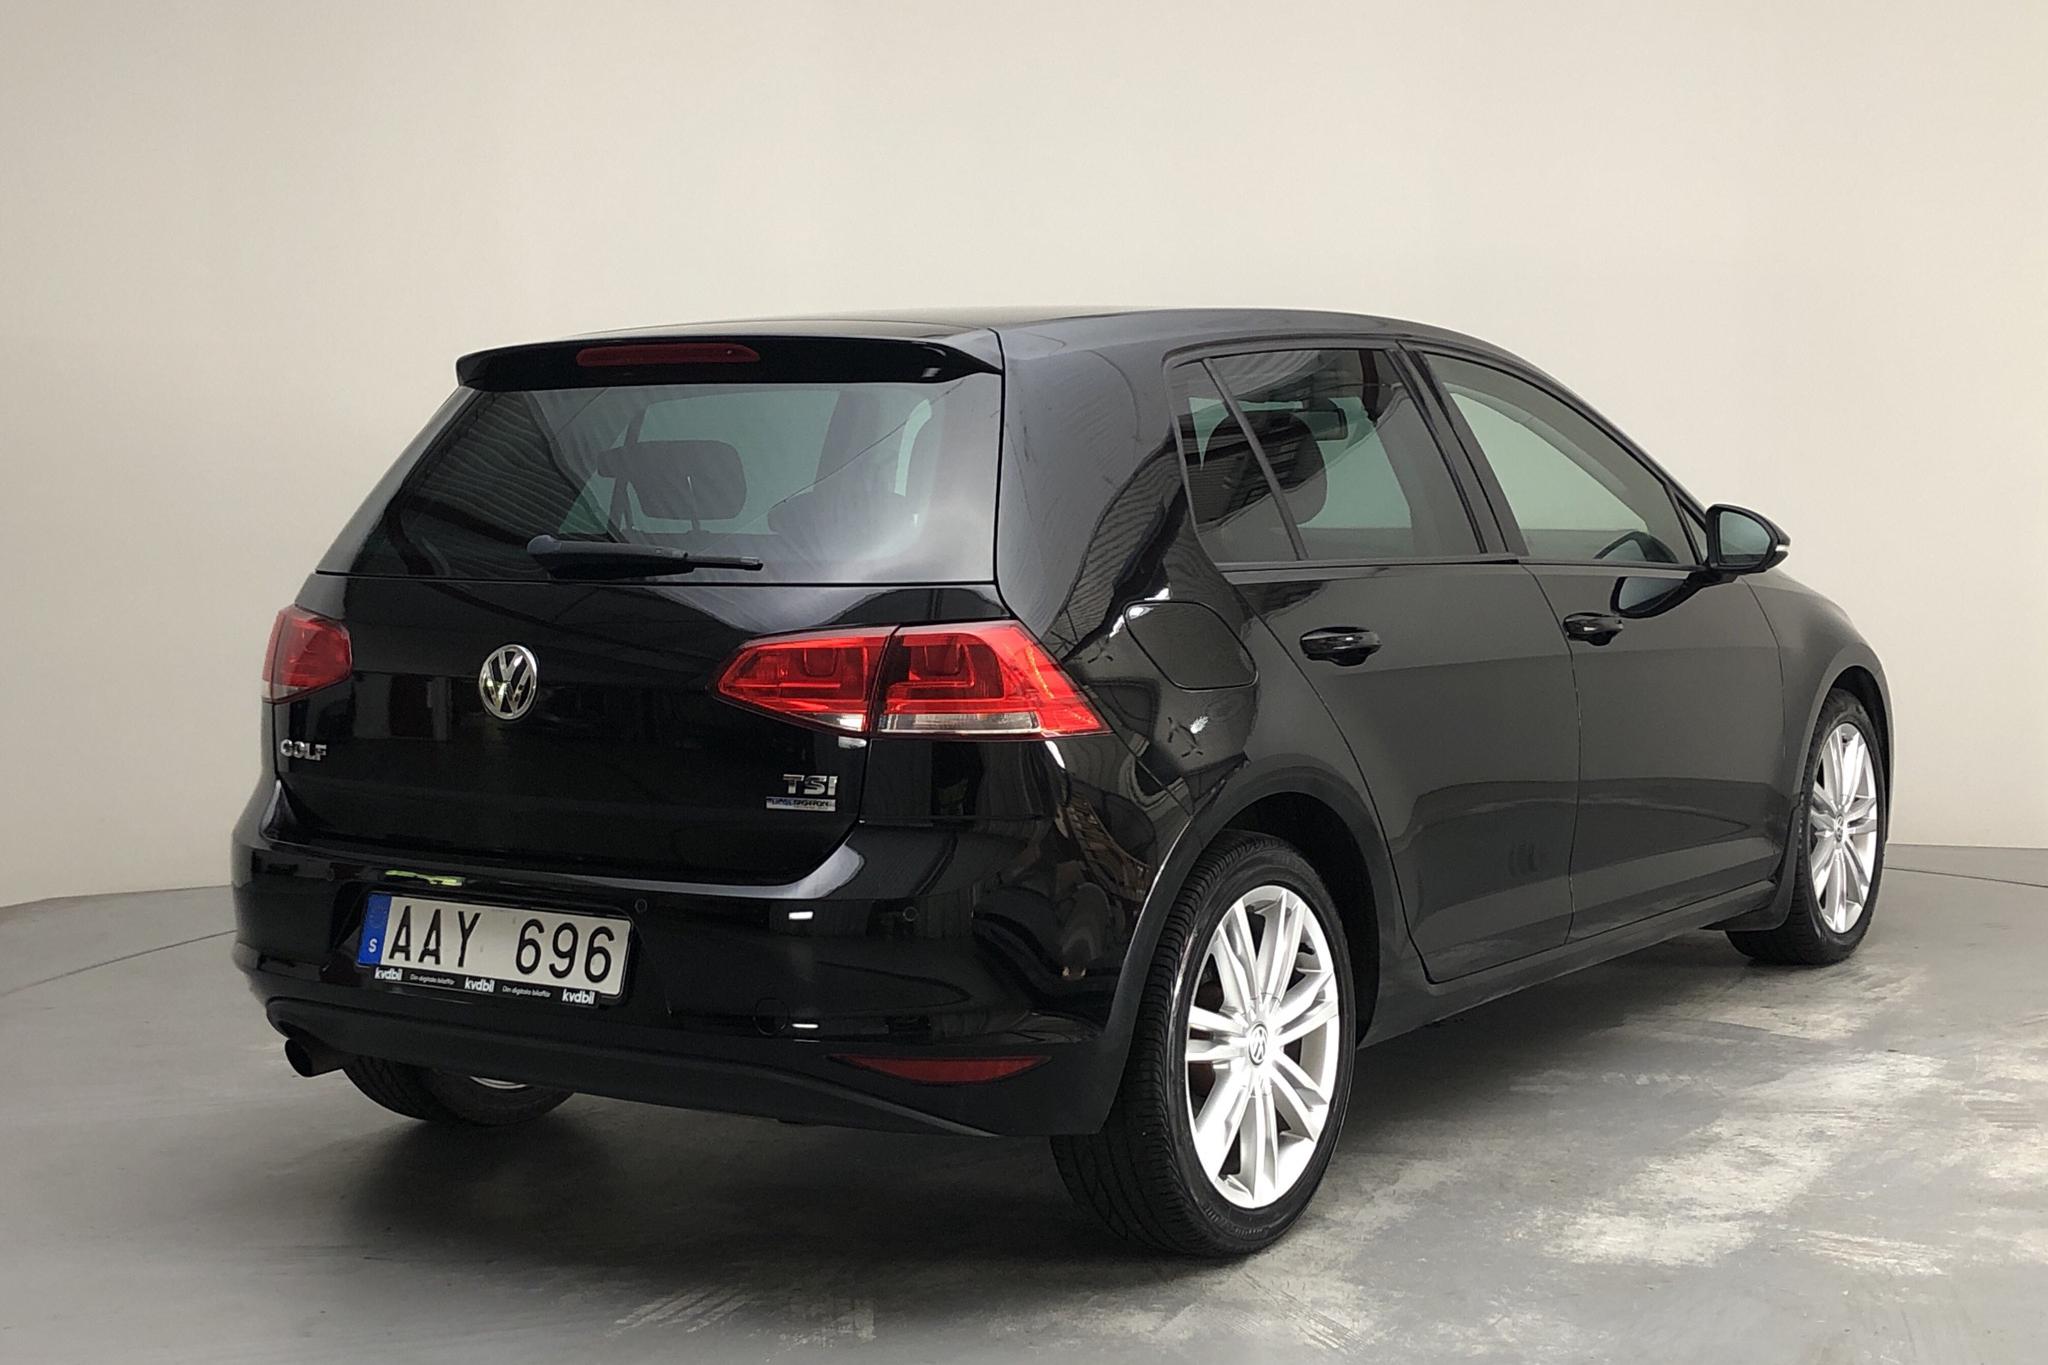 VW Golf VII 1.2 TSI 5dr (105hk) - 98 610 km - Manual - black - 2013